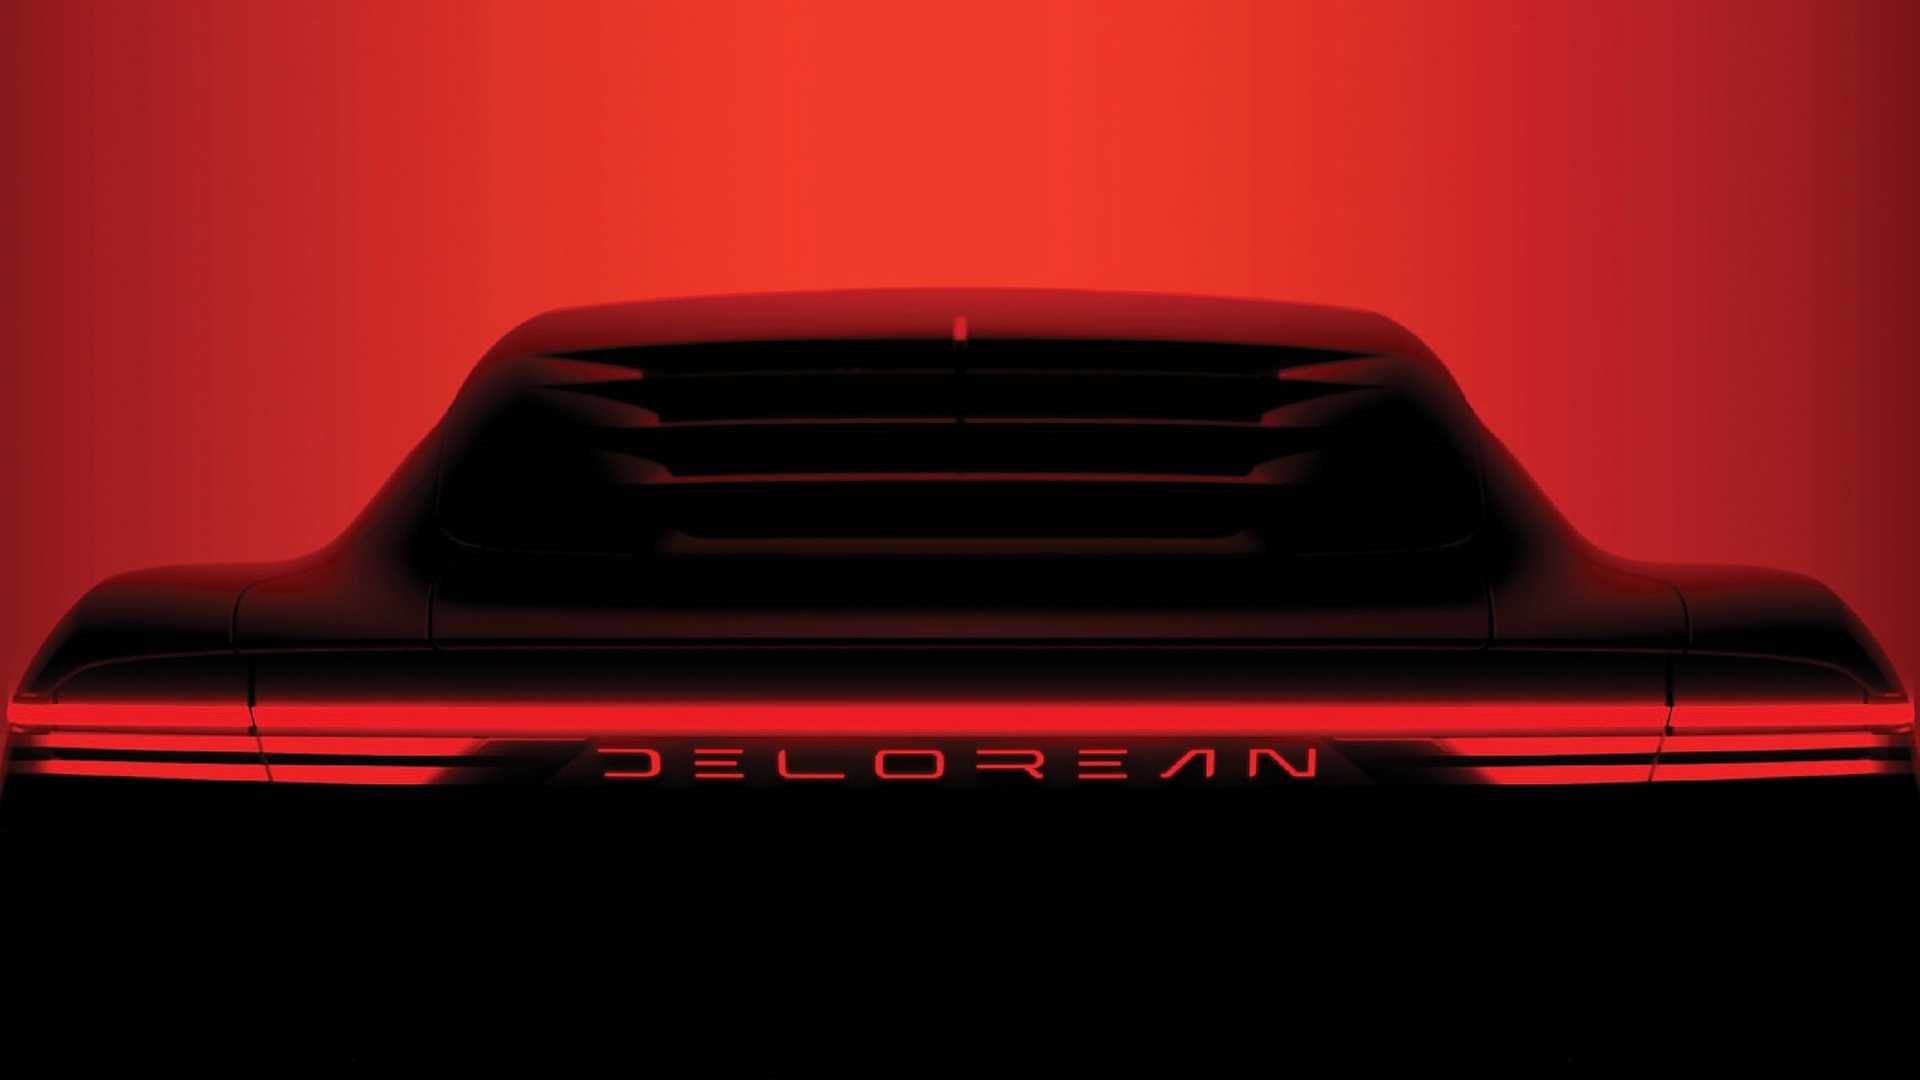 DeLorean zal op 31 mei worden geïntroduceerd: